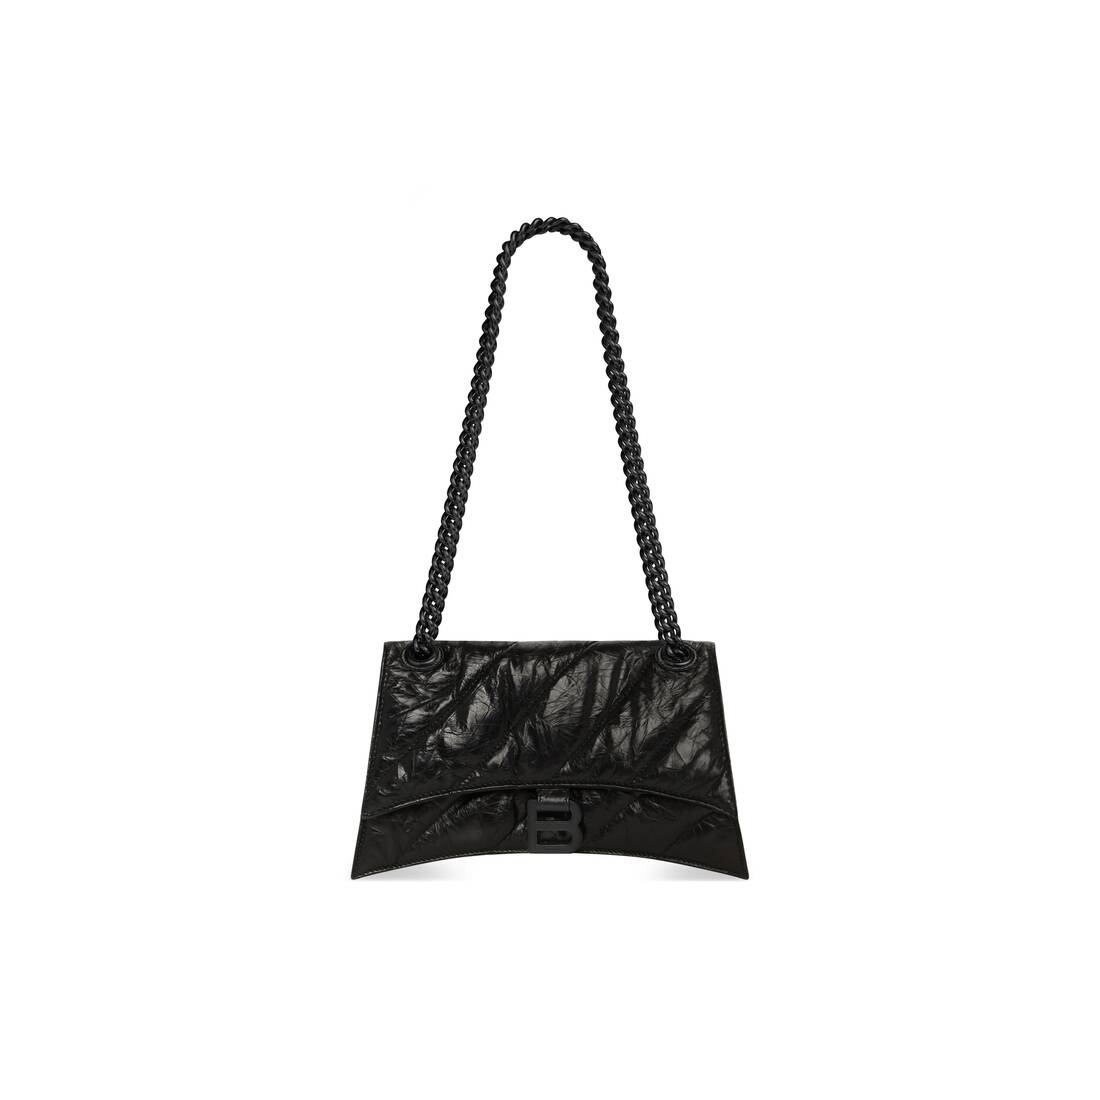 Balenciaga Crush Small Quilted Chain Shoulder Bag Black